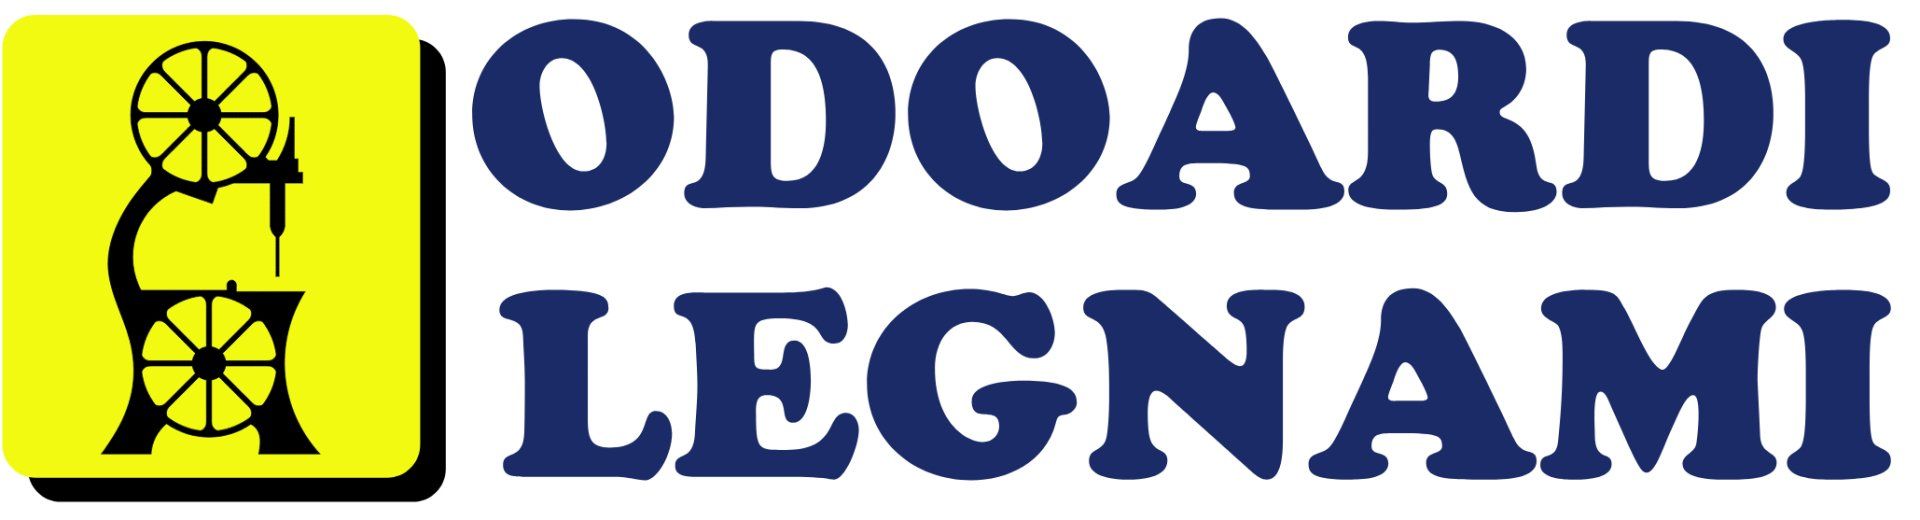 Logo - Odoardi Legnami